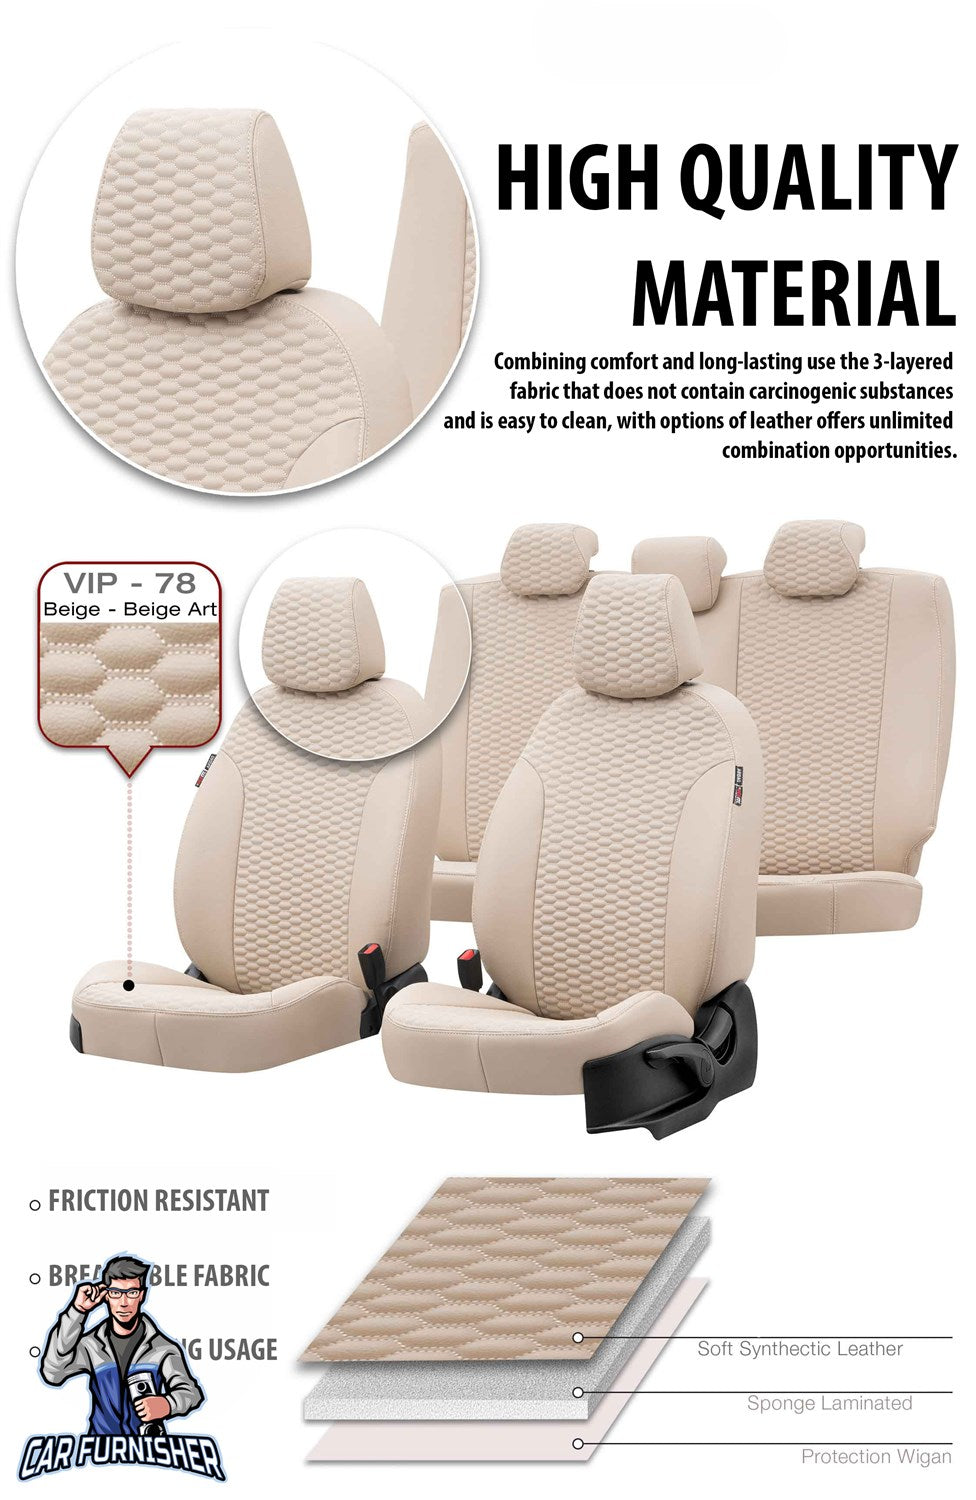 Daihatsu Terios Seat Covers Tokyo Leather Design Smoked Leather